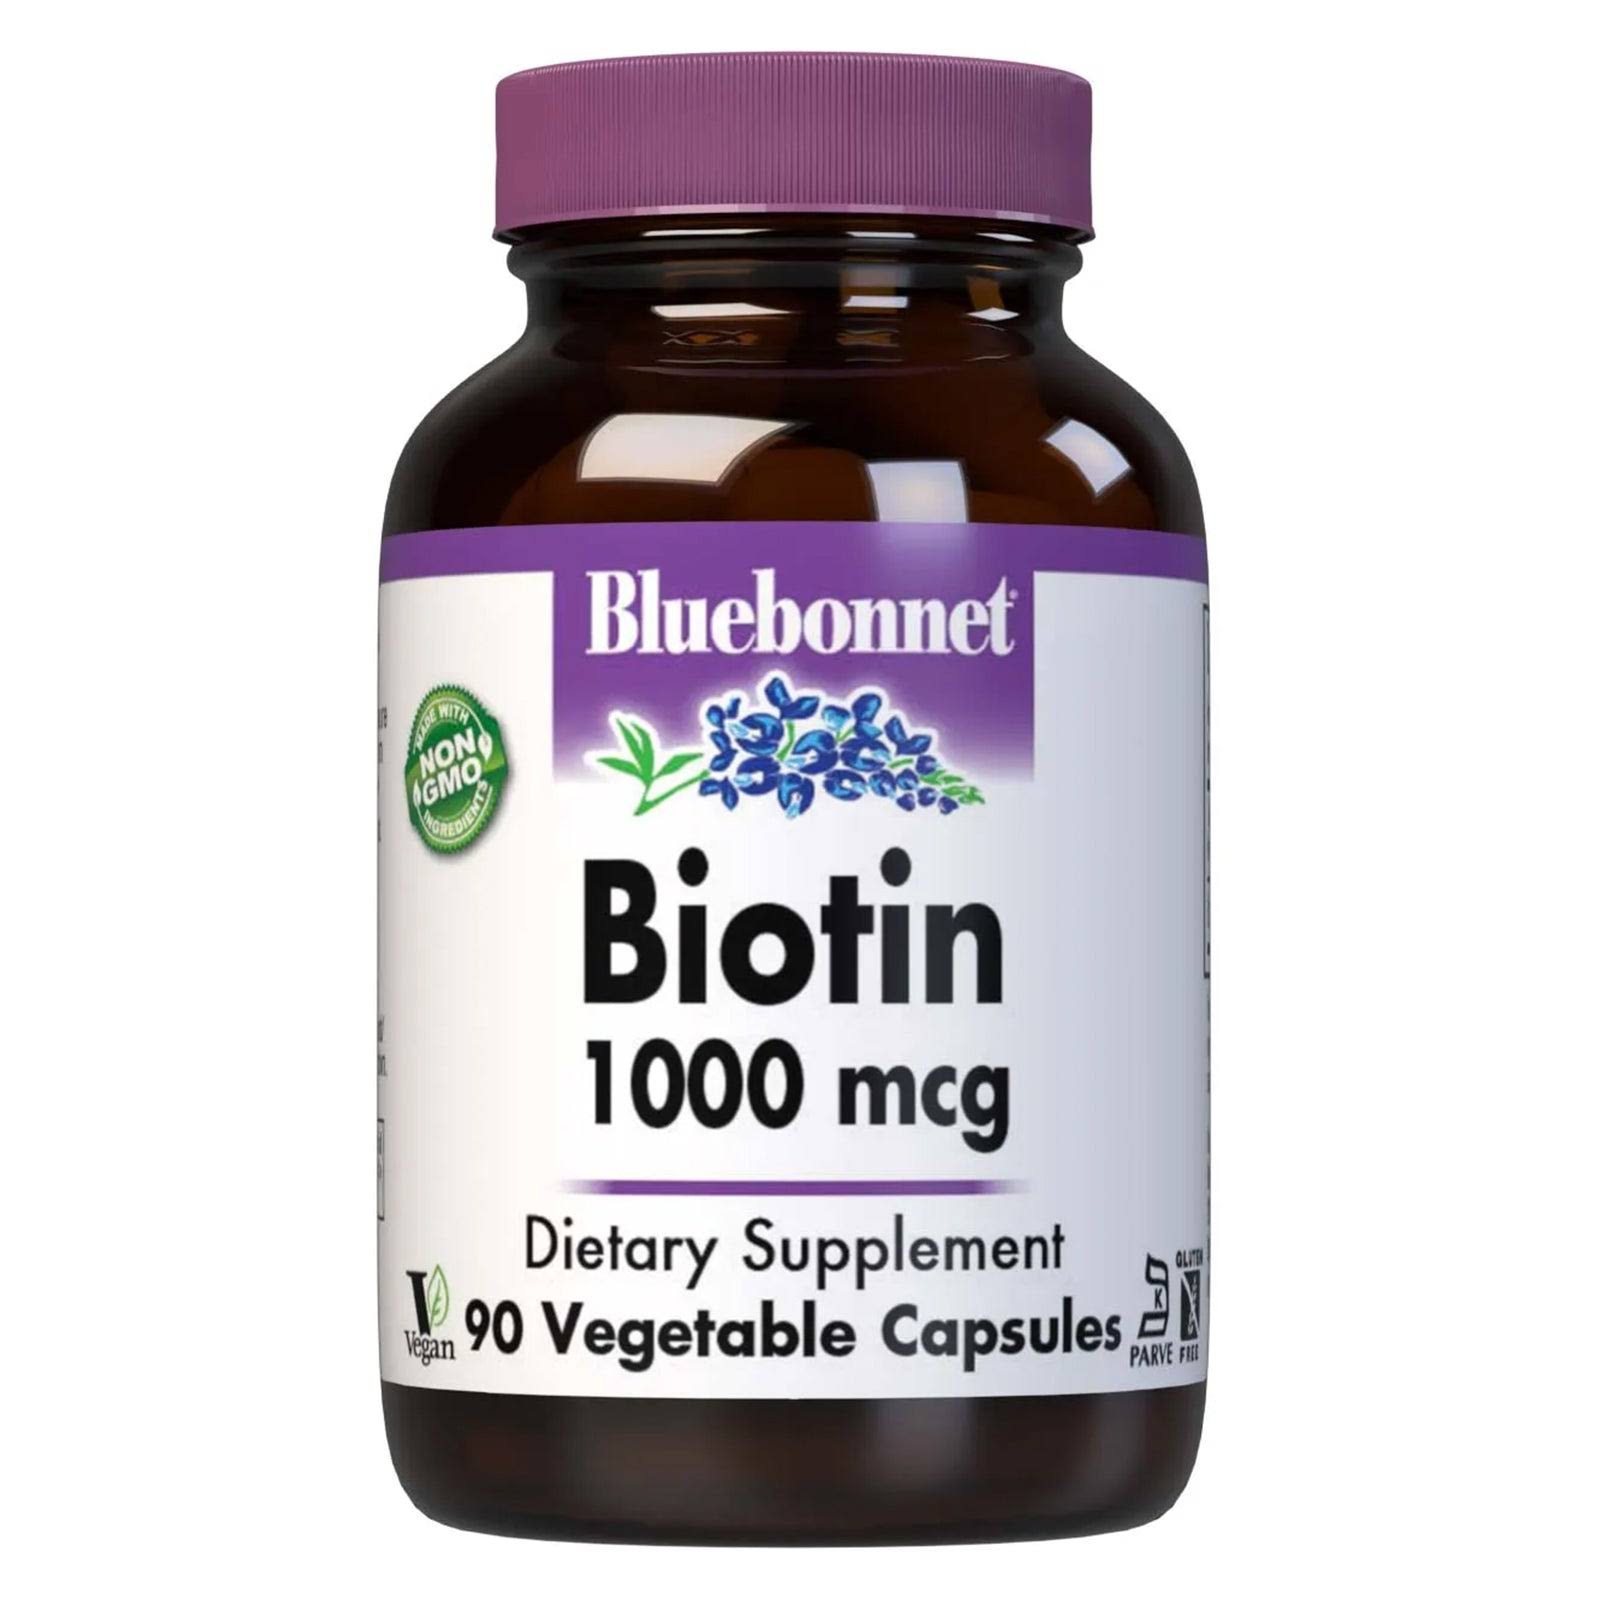 Bluebonnet Biotin - 90 Vcaps, 1000 Mcg